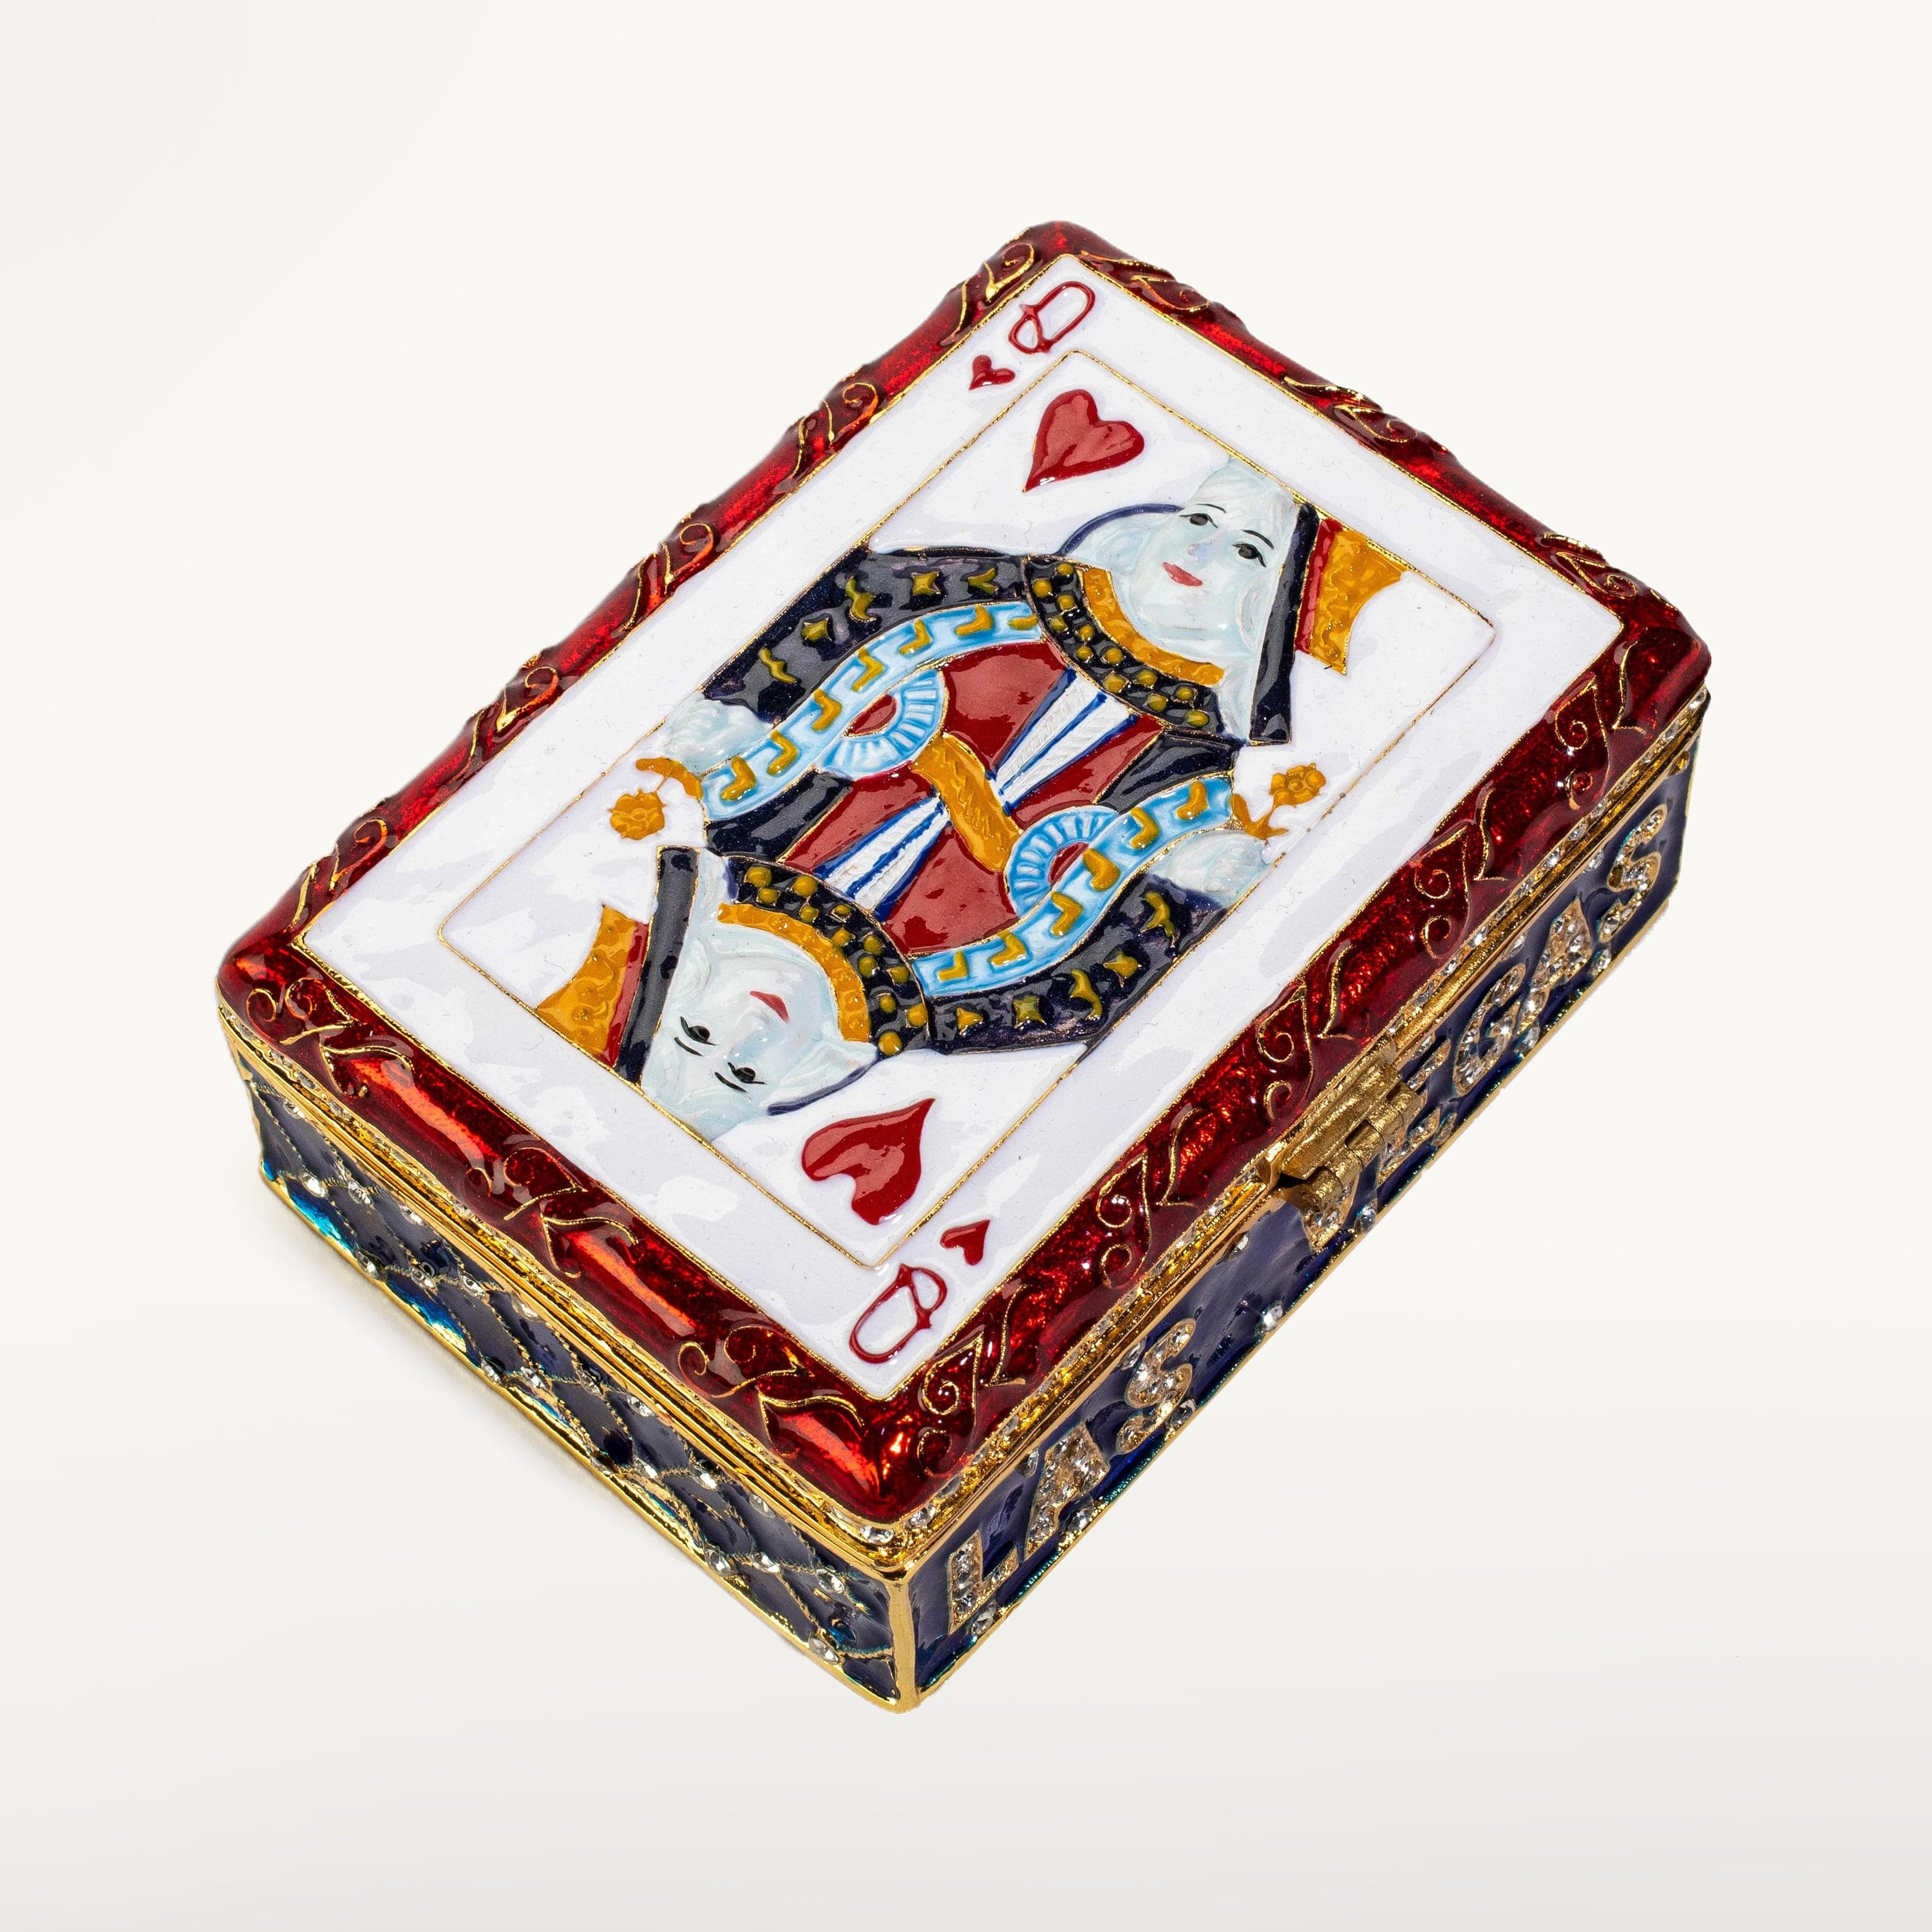 Kalifano Vanity Figurine Playing Card Figurine Keepsake Box made with Crystals SVA-108